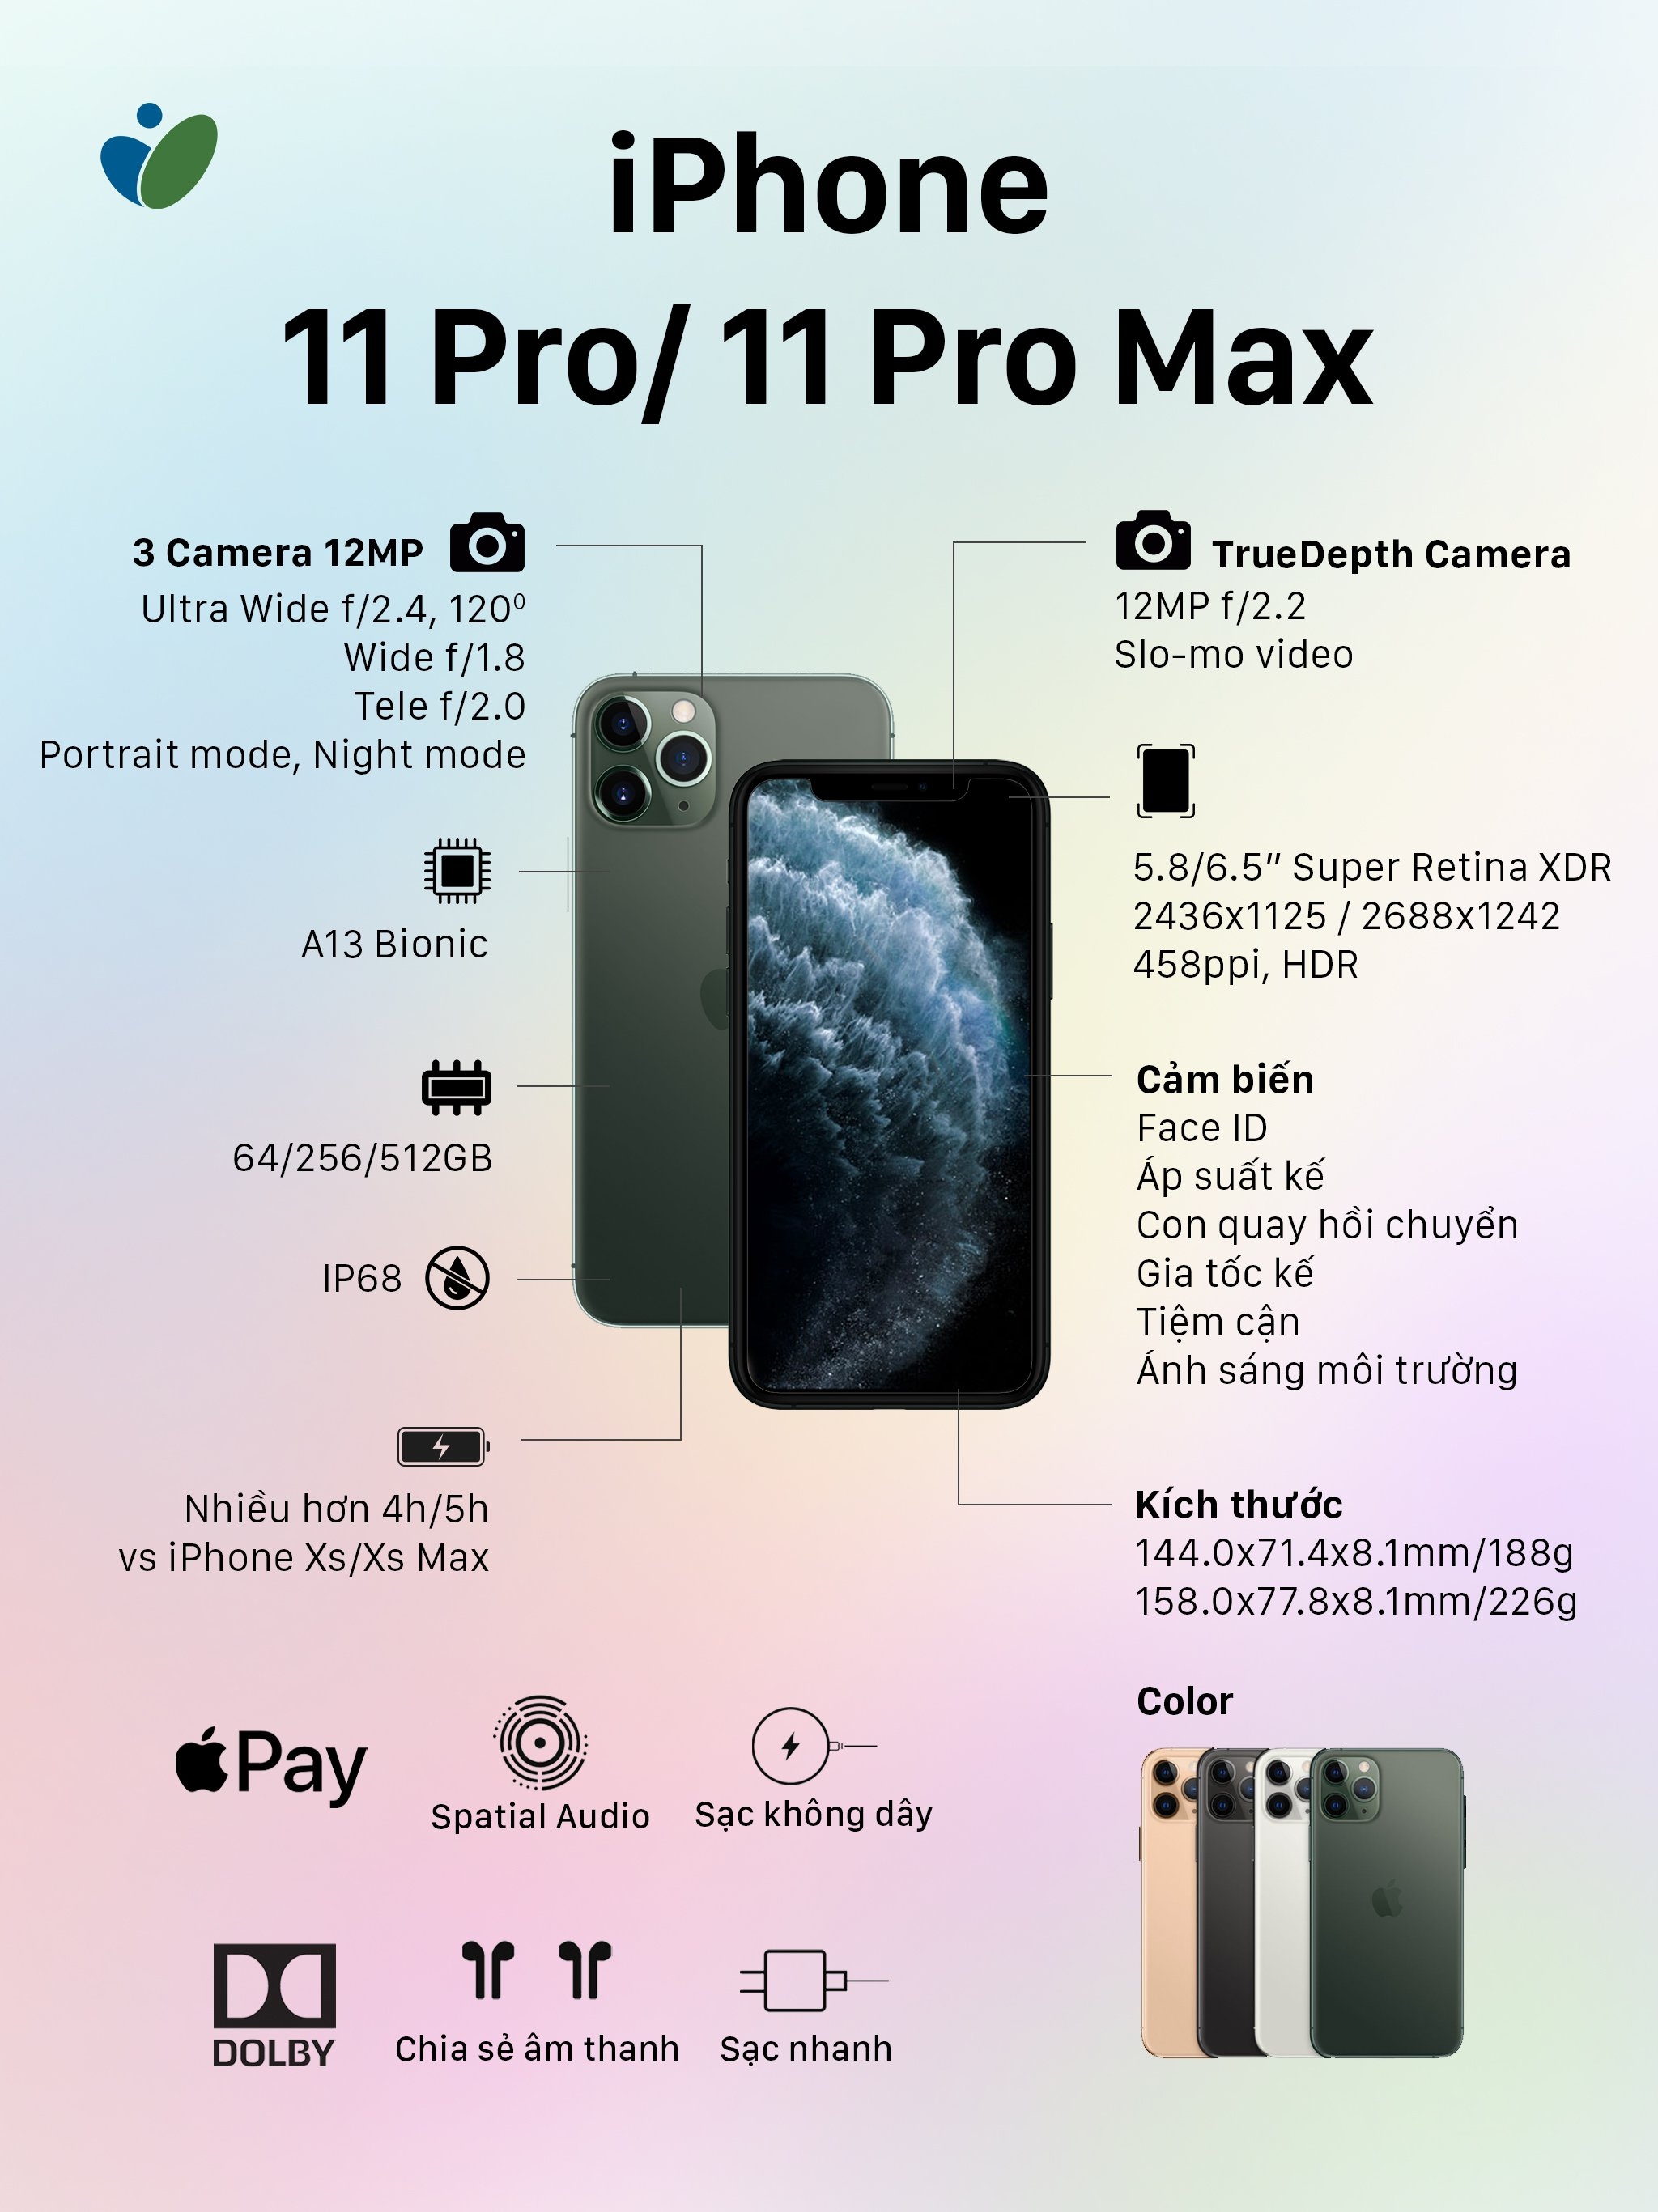 Xi характеристики. Iphone 11 Pro Max. Iphone 11 Pro Pro Max. Iphone 11 Pro Max 64gb. Iphone 11 Pro Max 128gb.